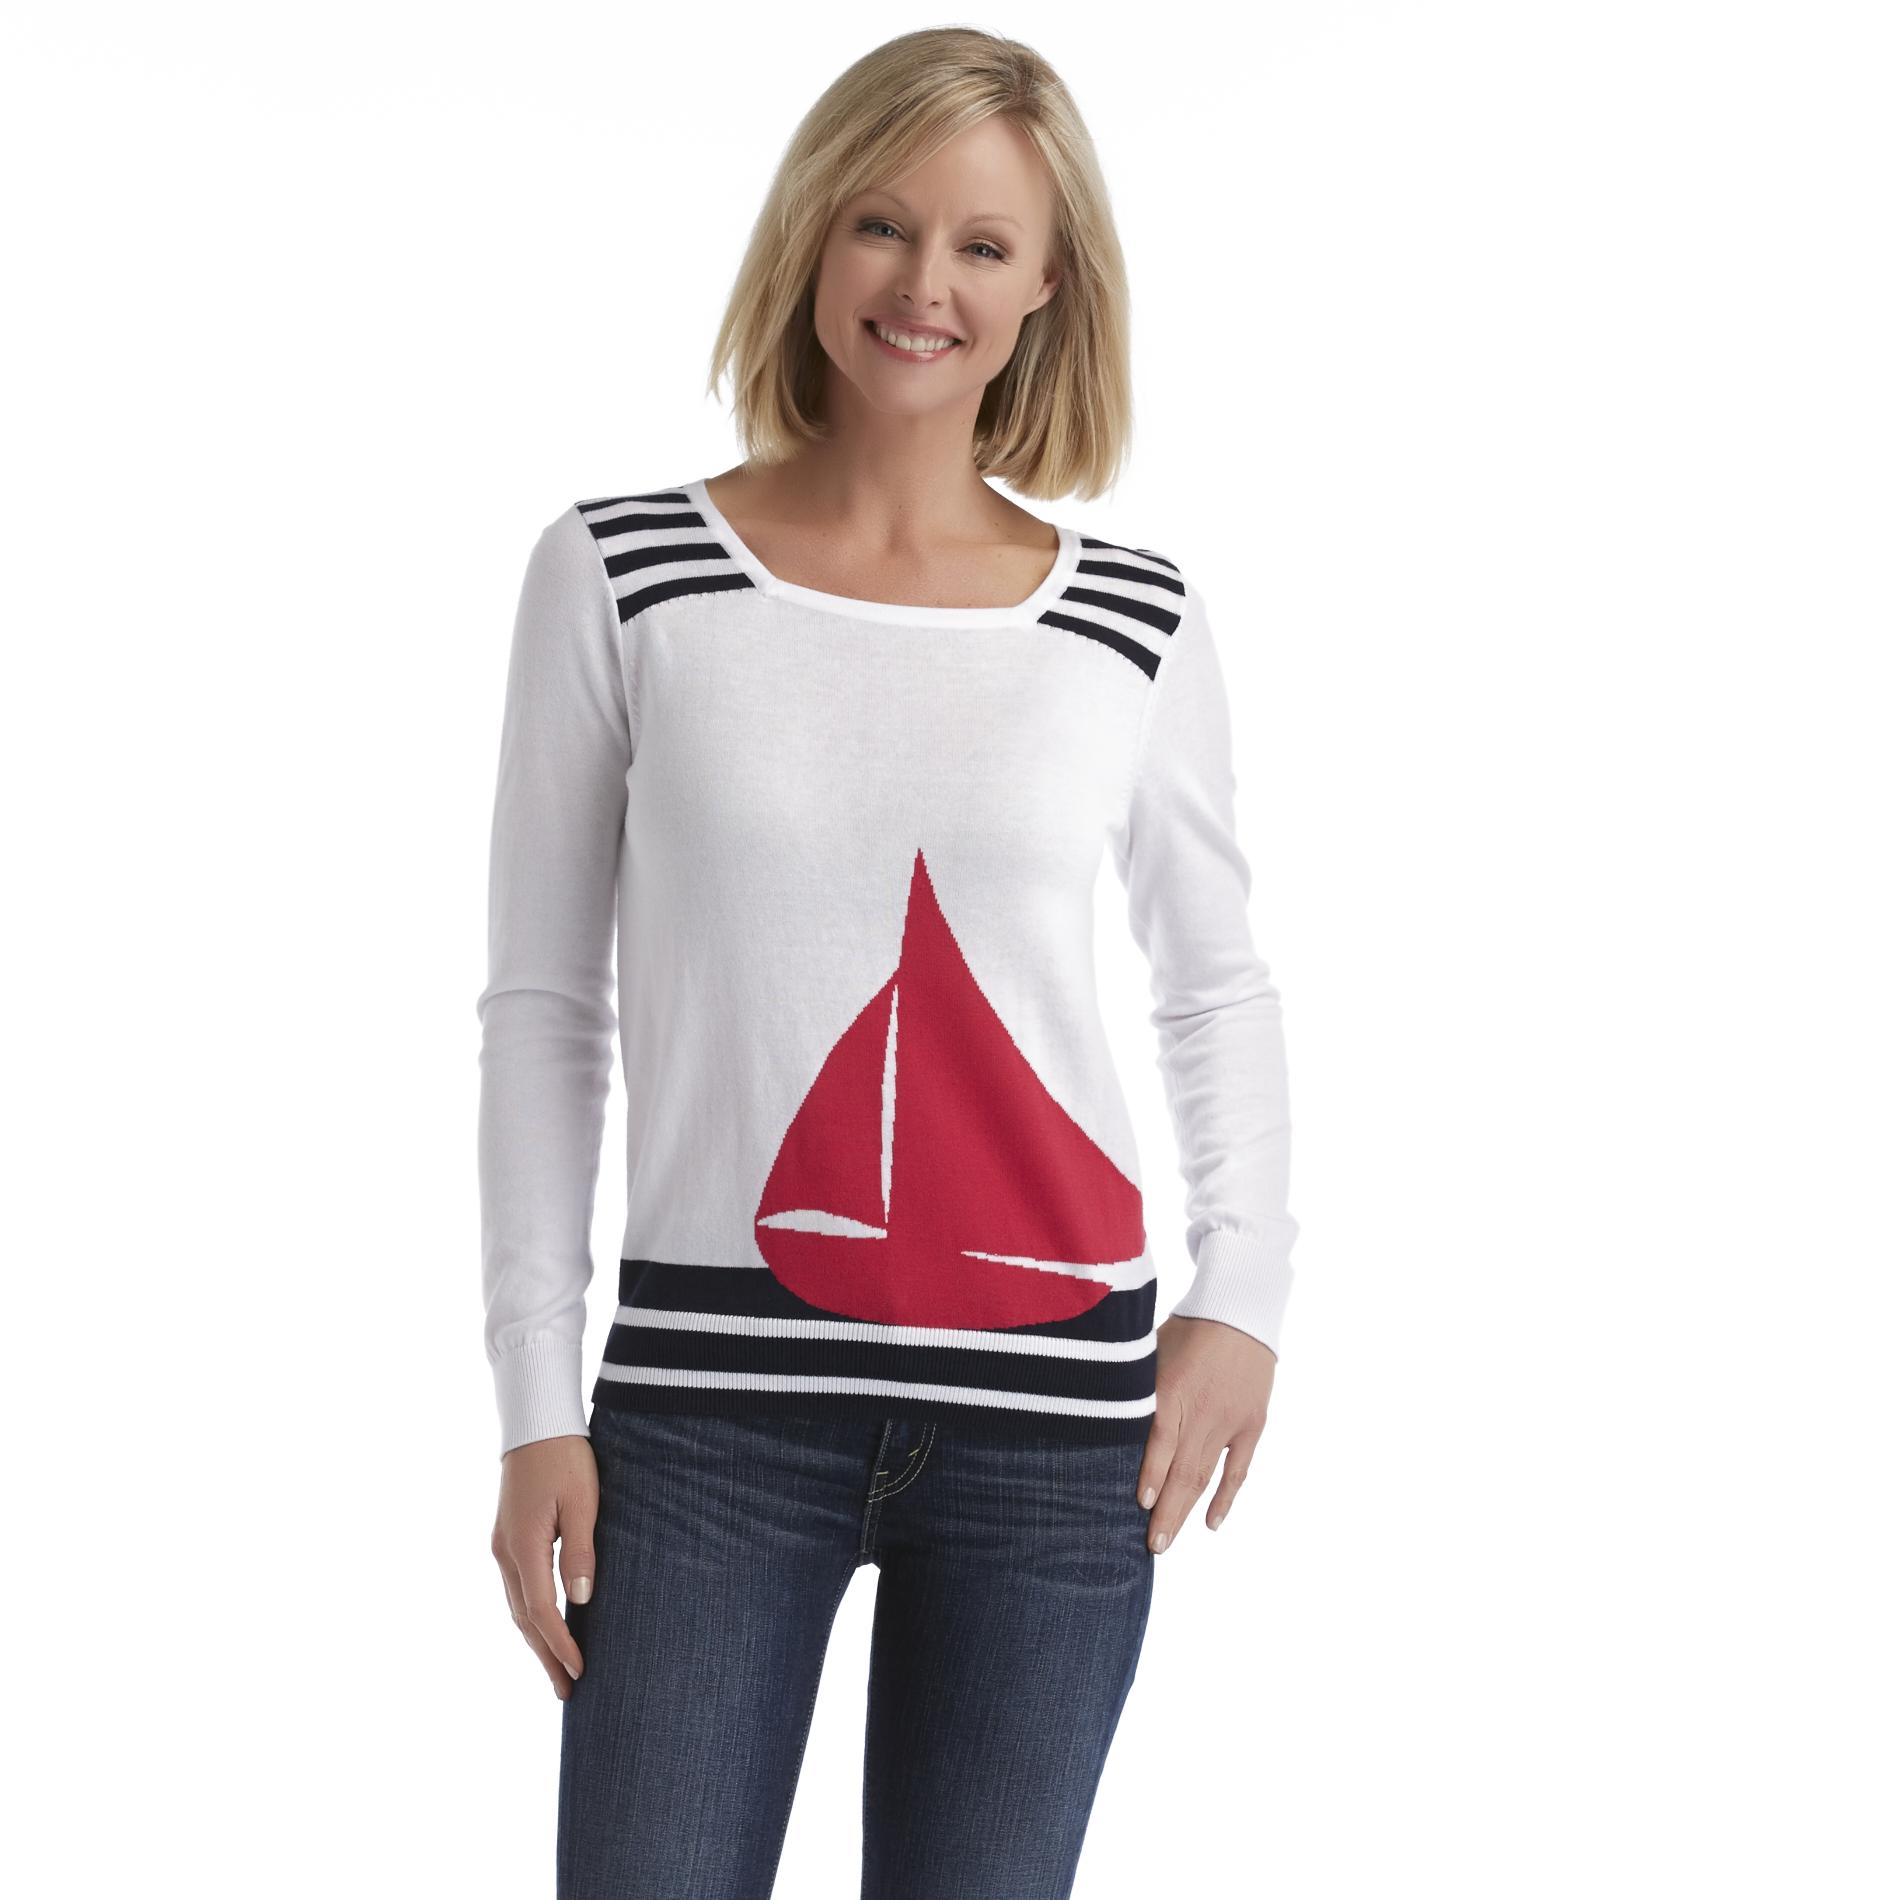 Jaclyn Smith Women's Sweater - Sailing